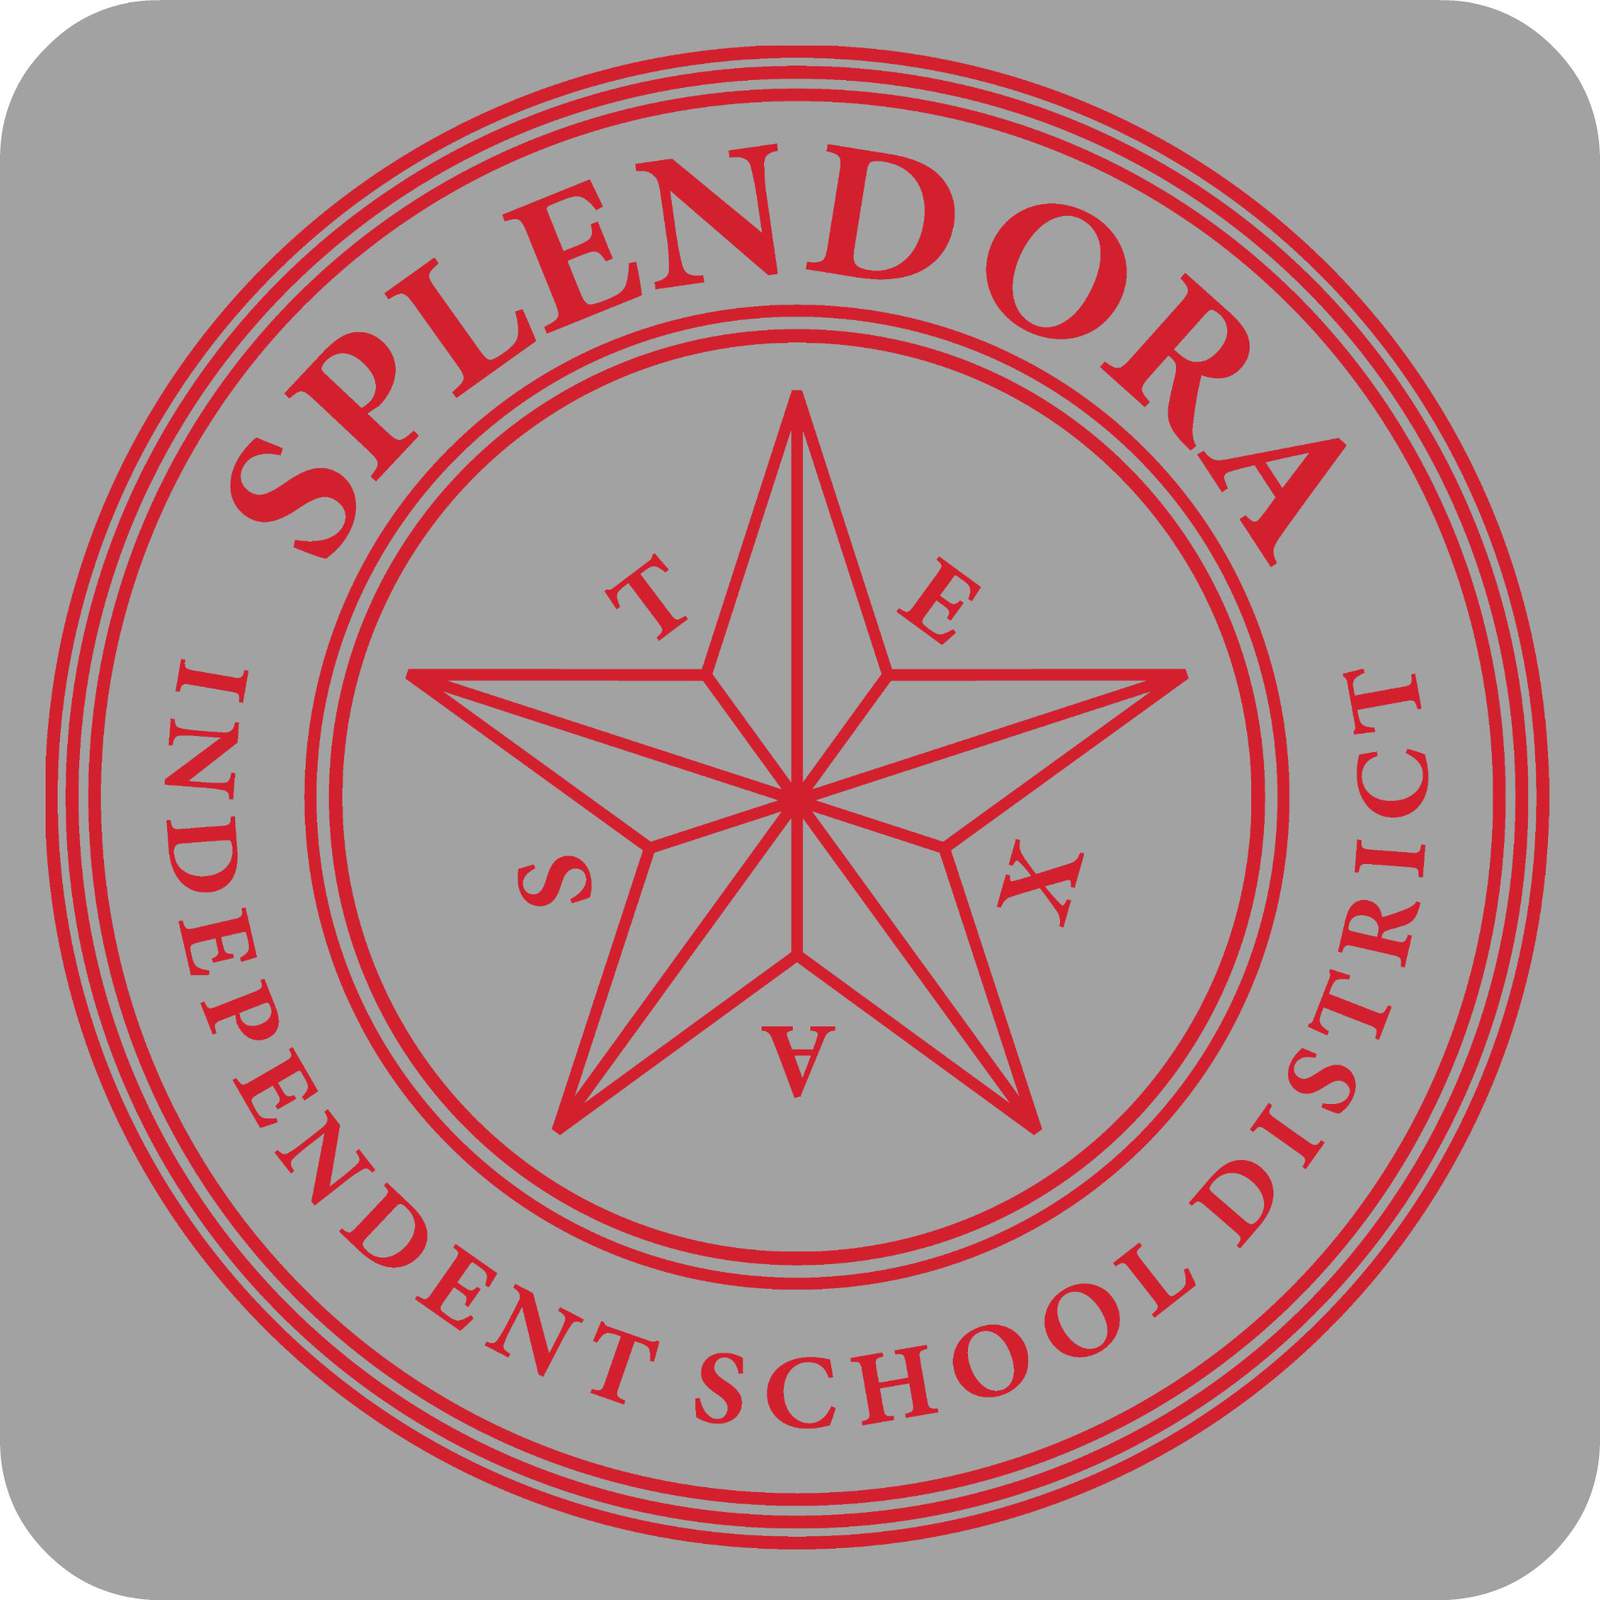 Splendora Independent School District: How class size limits will work next school year